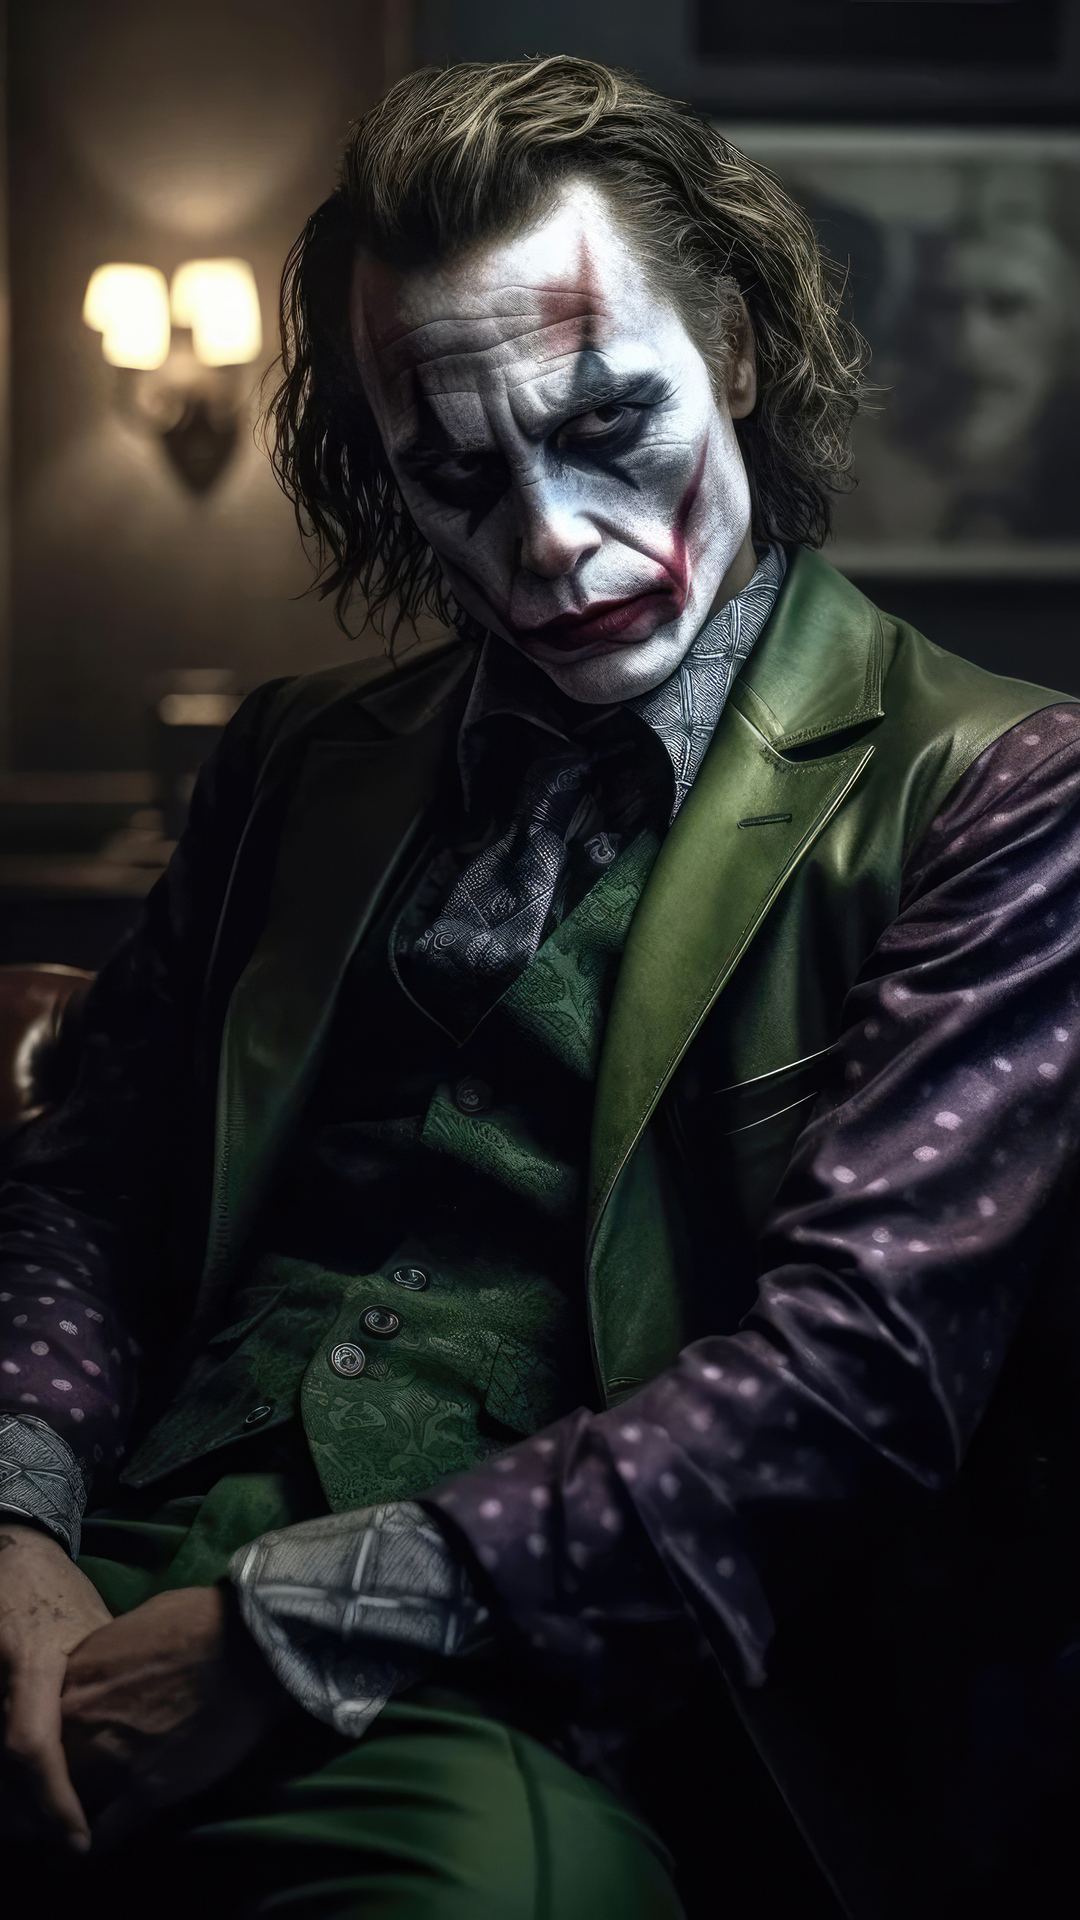 Joker Sitting Alone